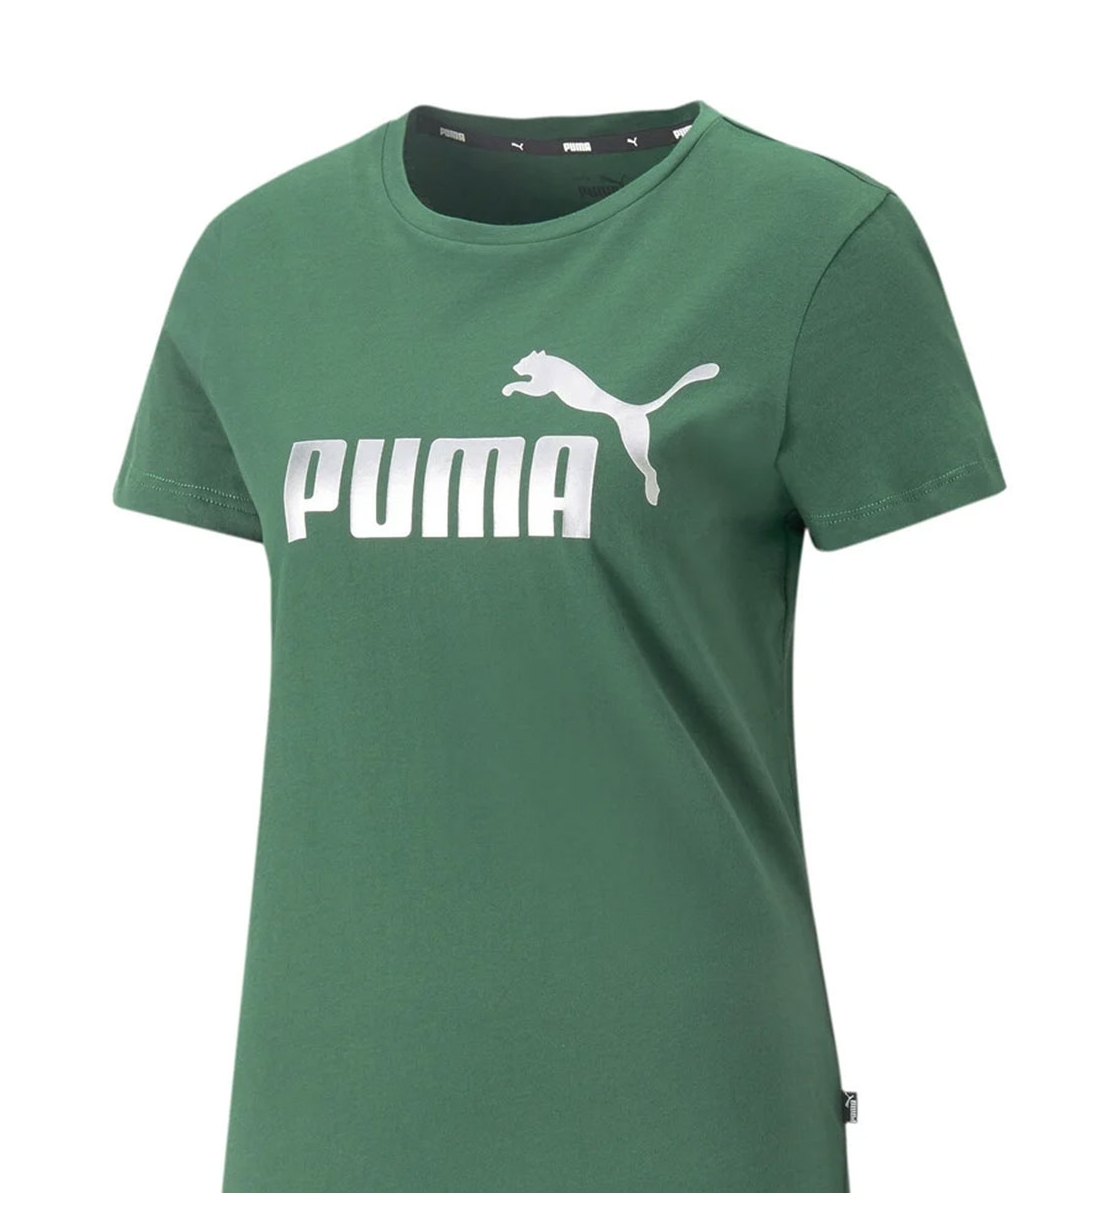 Puma Ss22 Ess+ Metallic Logo Tee